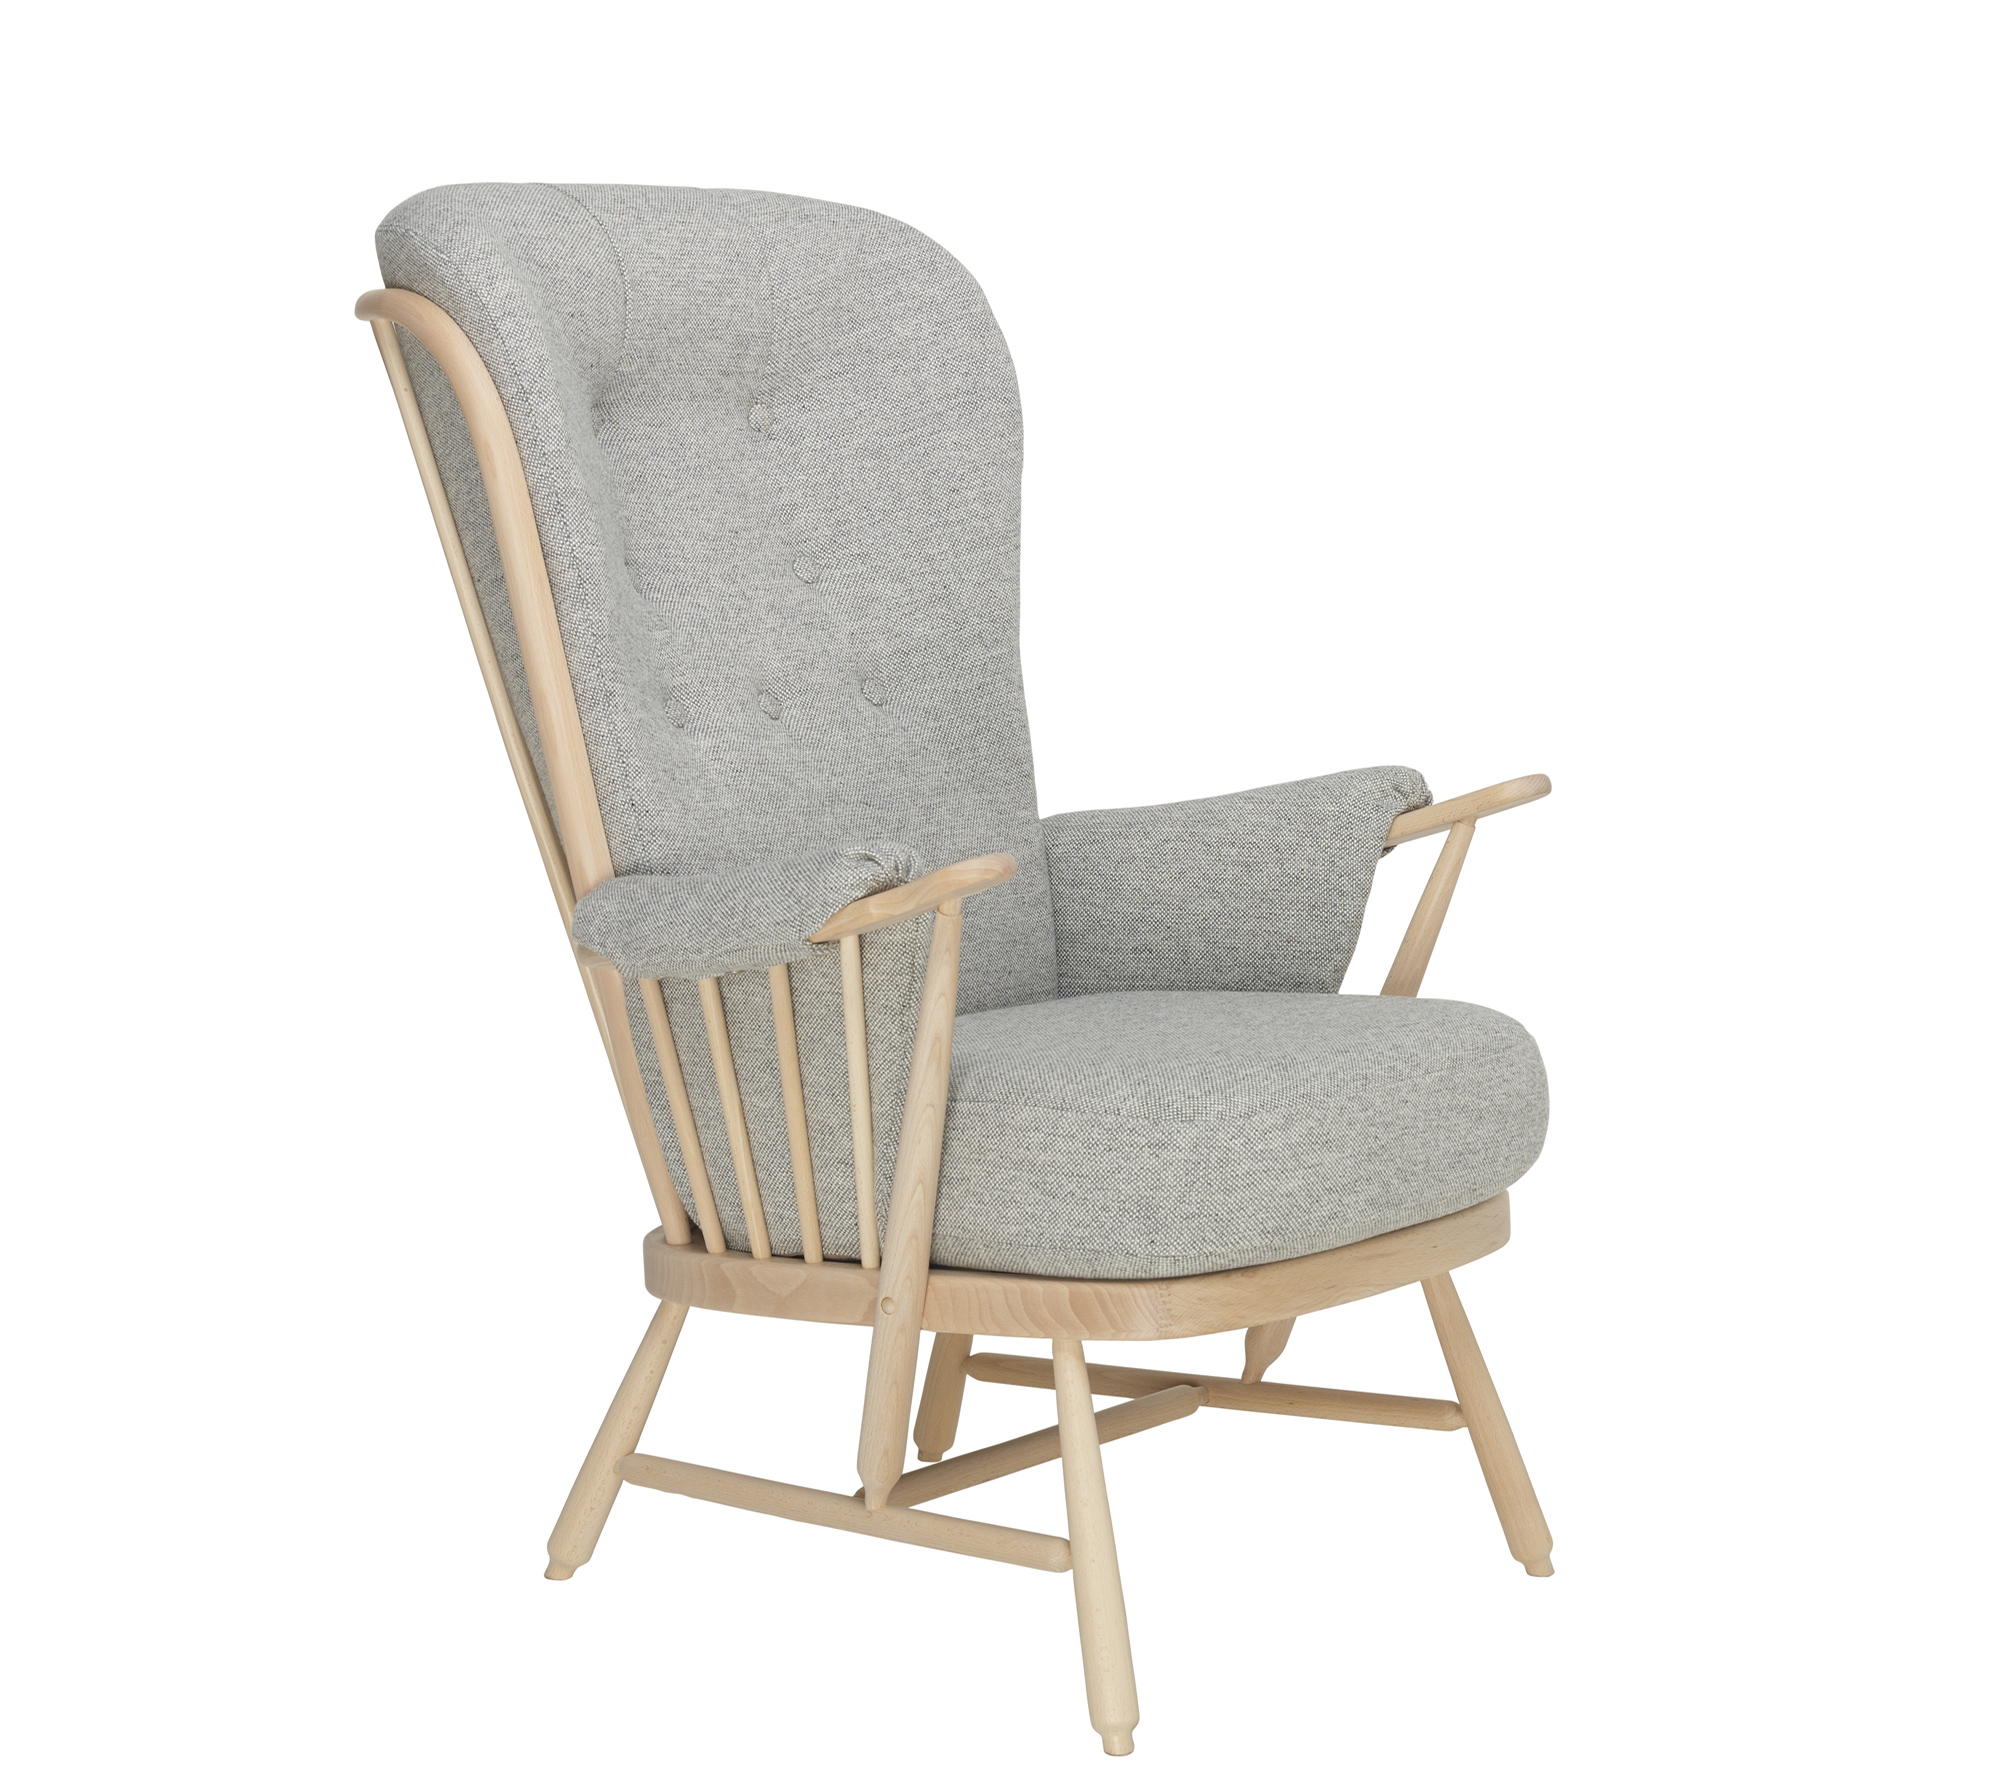 Evergreen Chair Ercol Furniture